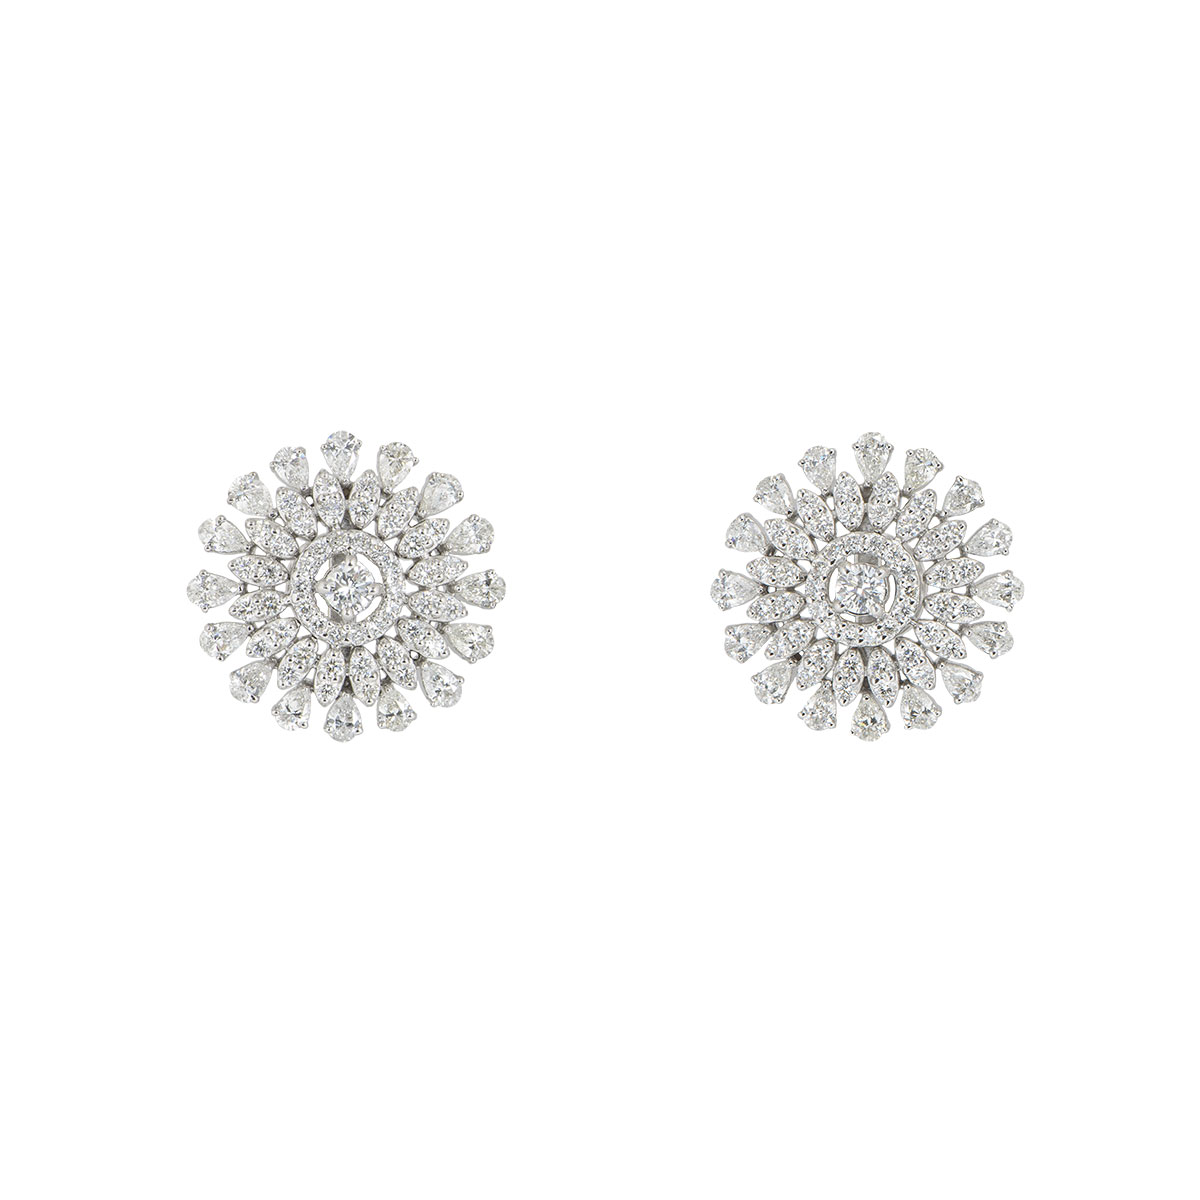 White Gold Diamond Earrings 3.15ct | Rich Diamonds